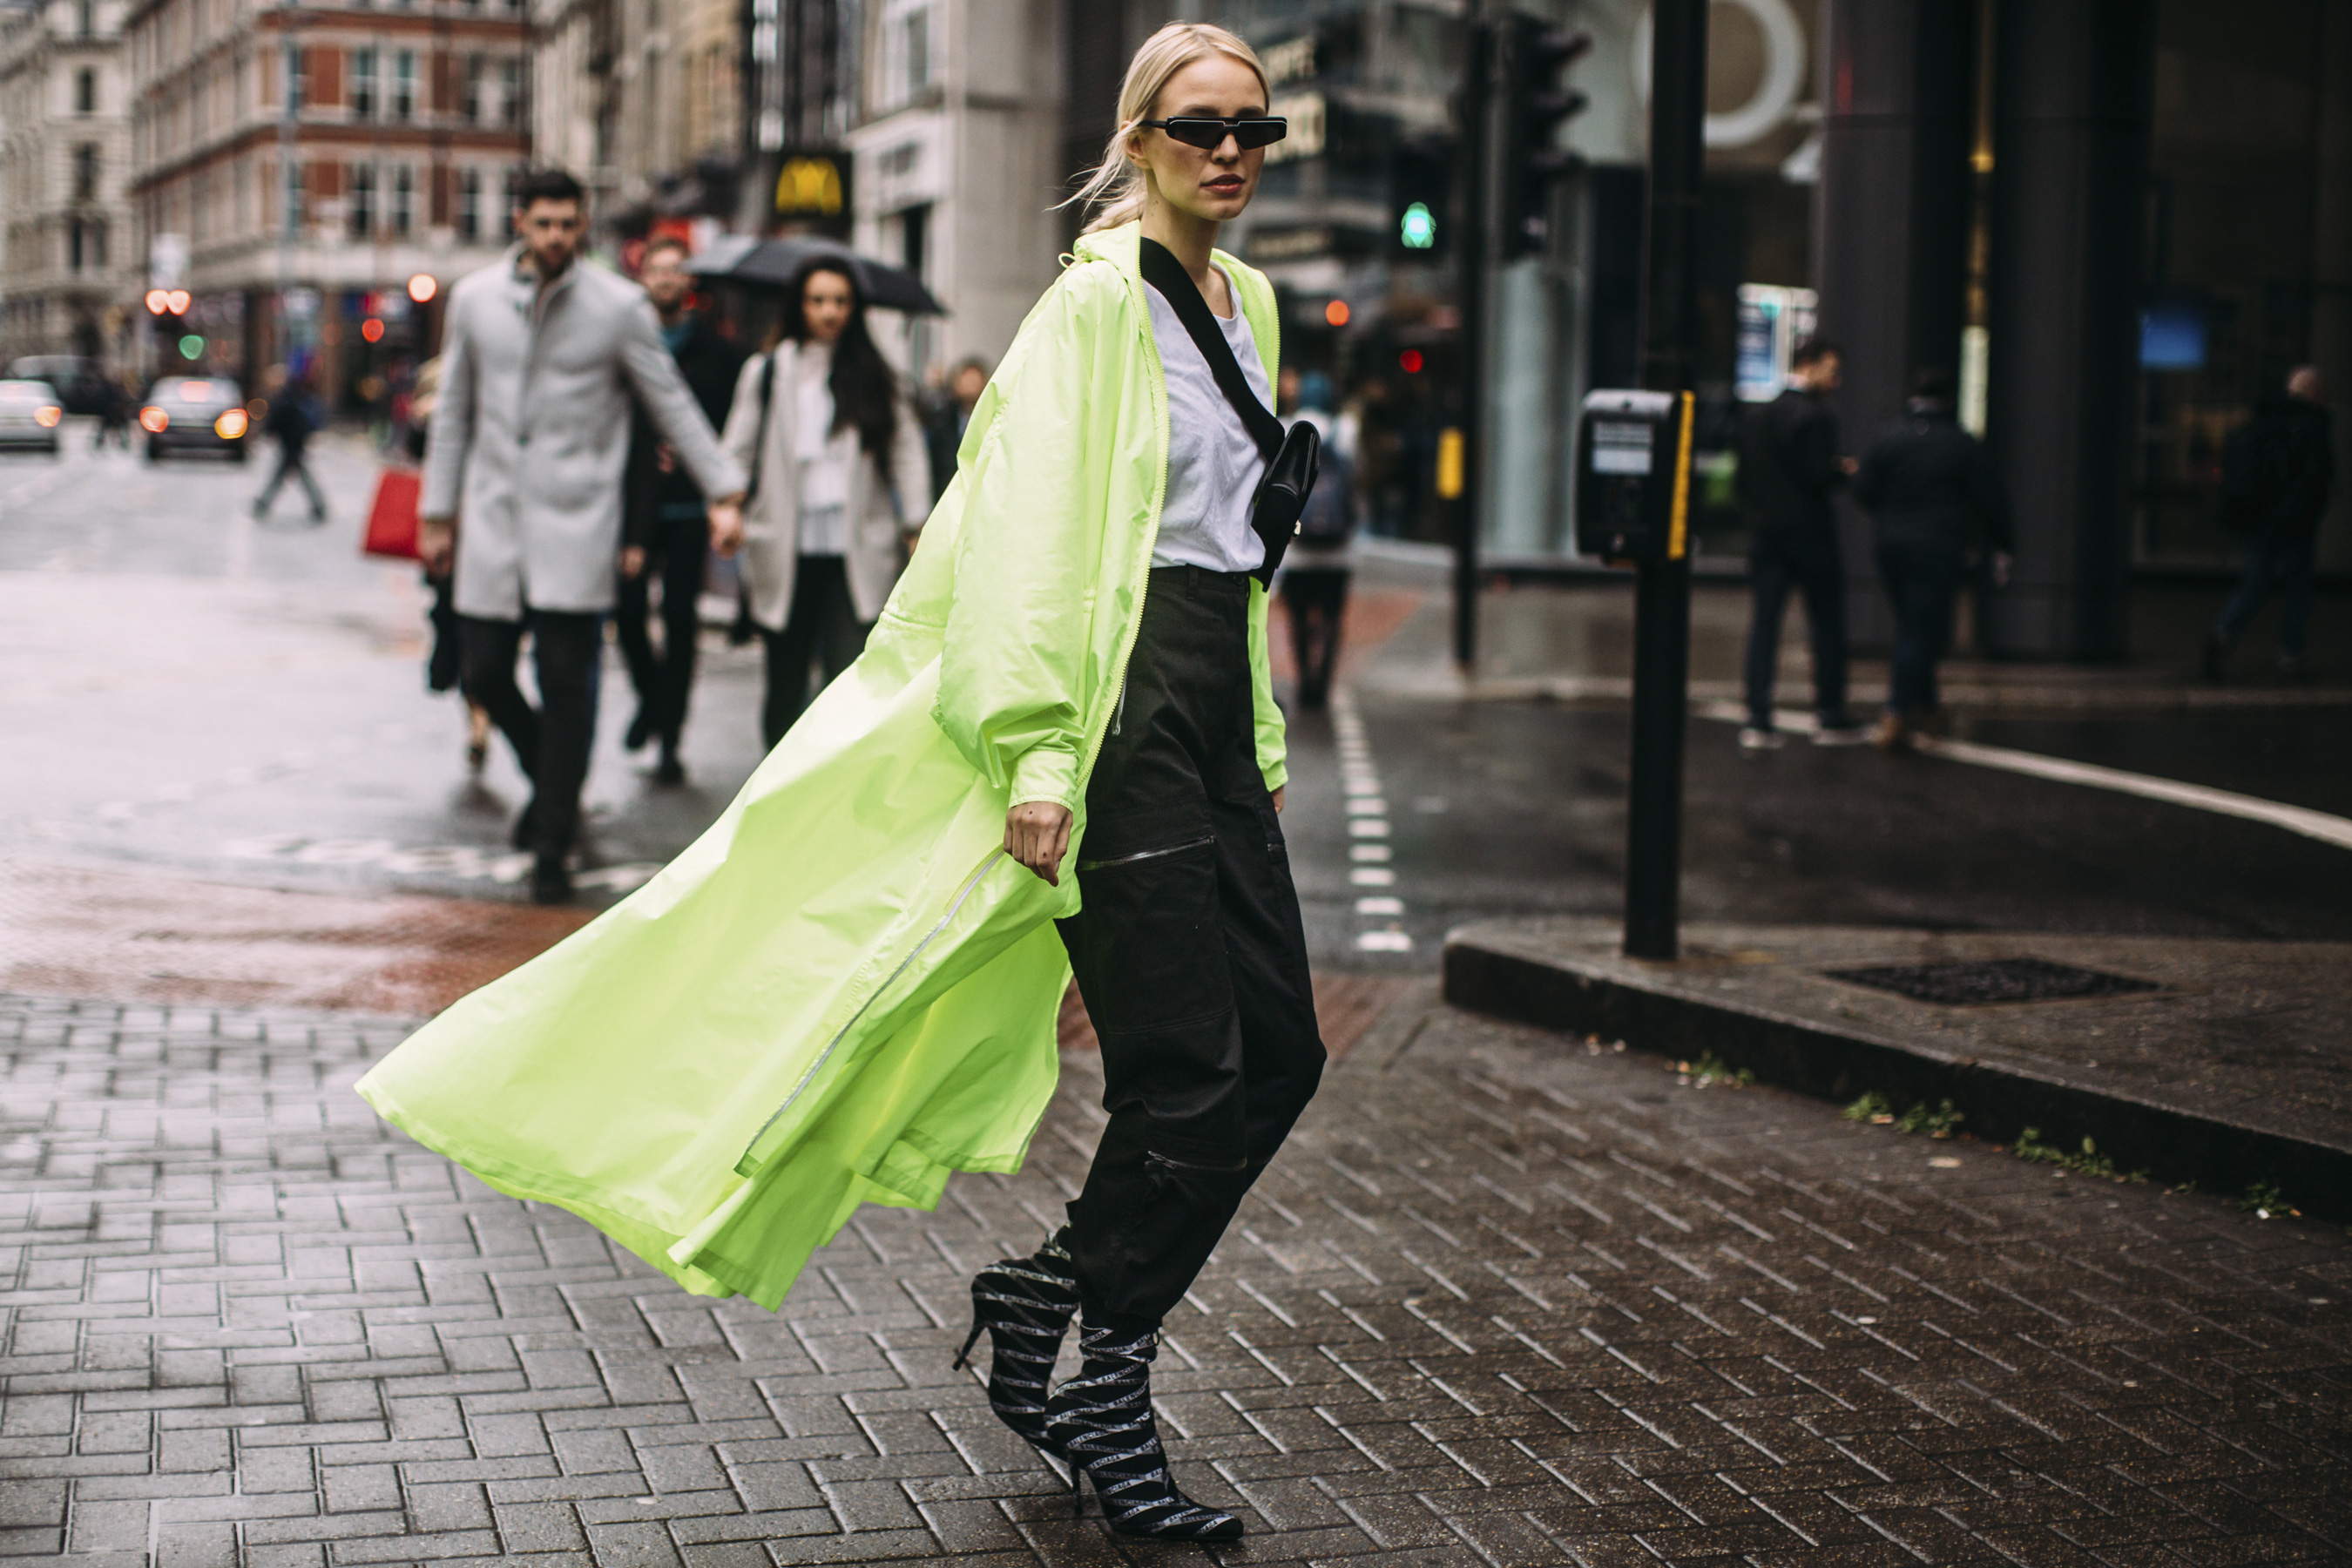 London Fashion Week Street Style Fall 2019 Day 4 | The Impression